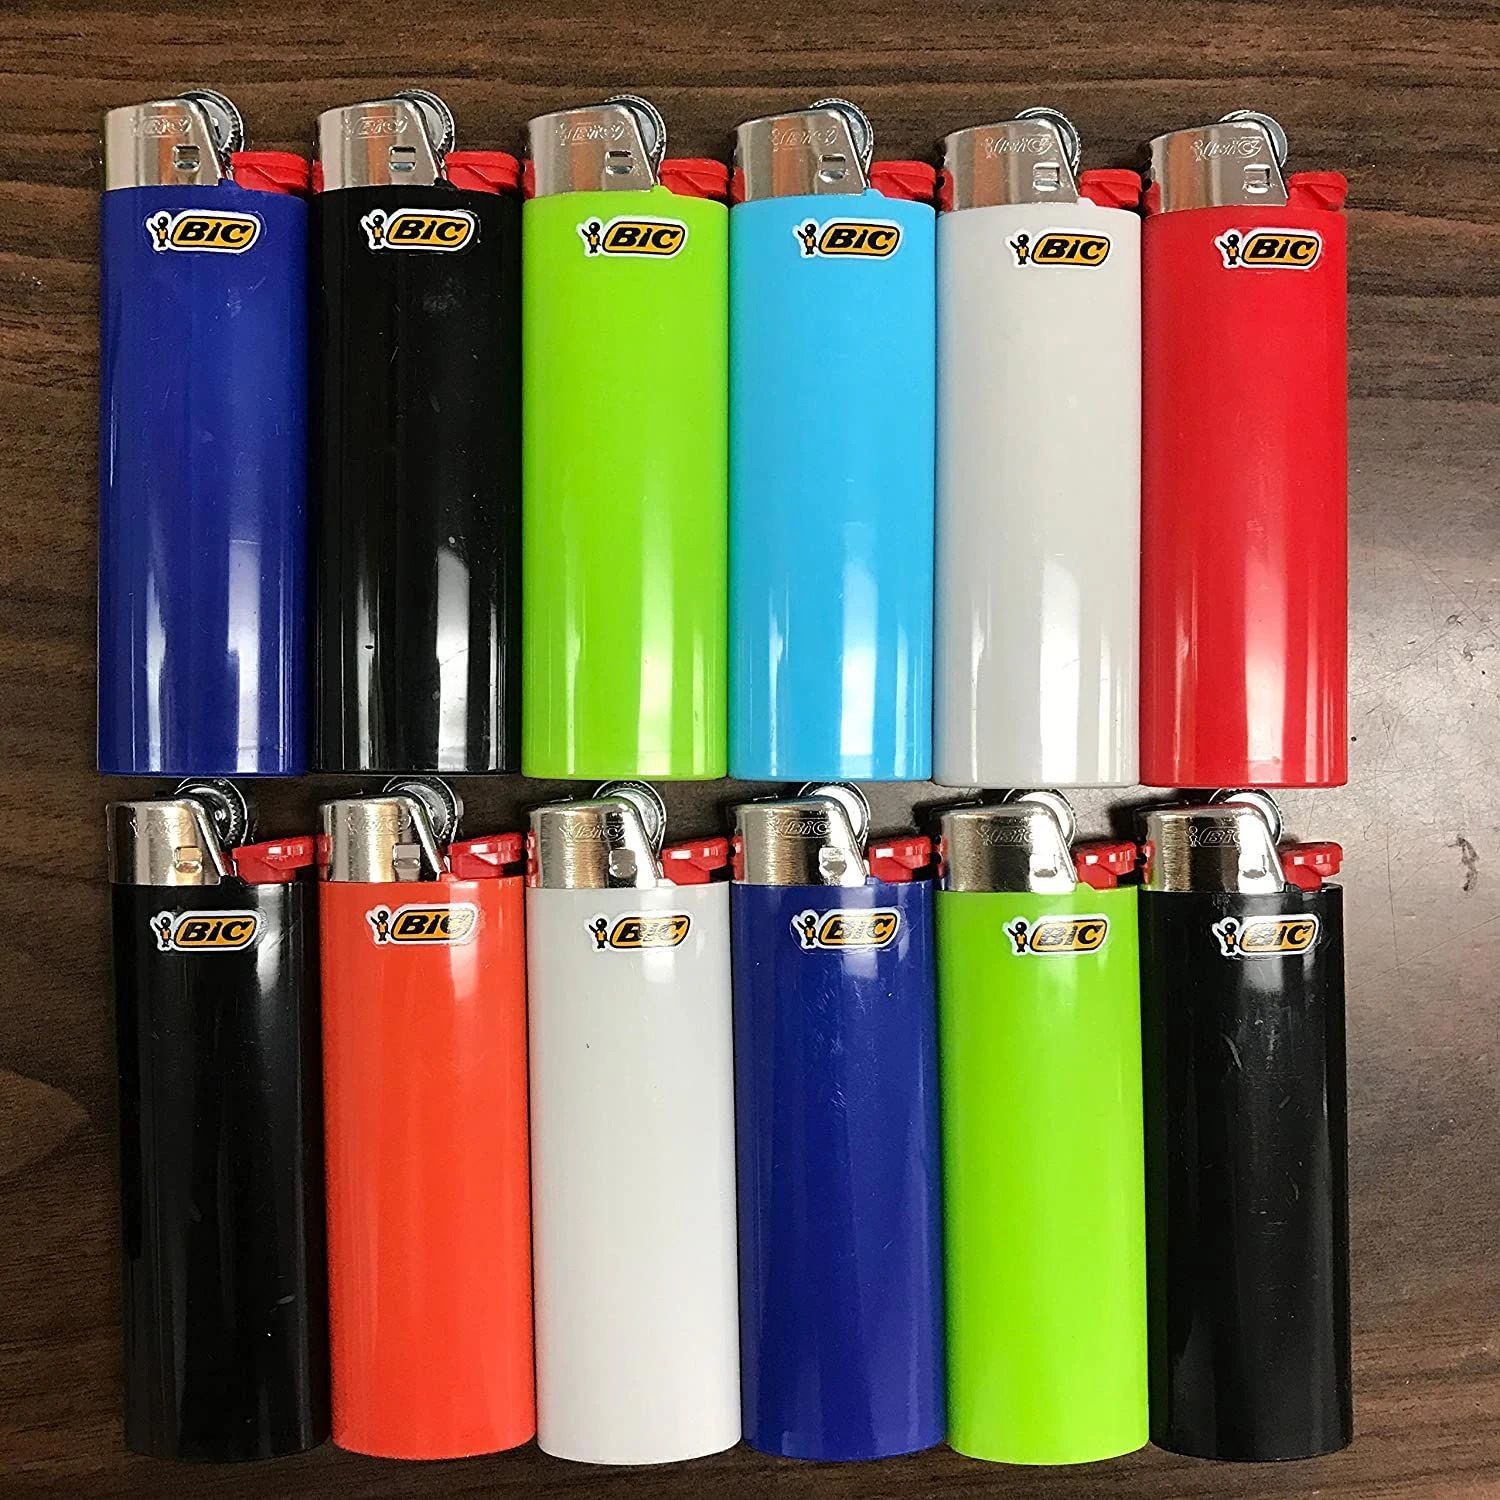 Buy Bic Lighter from SCHEX LTD, USA